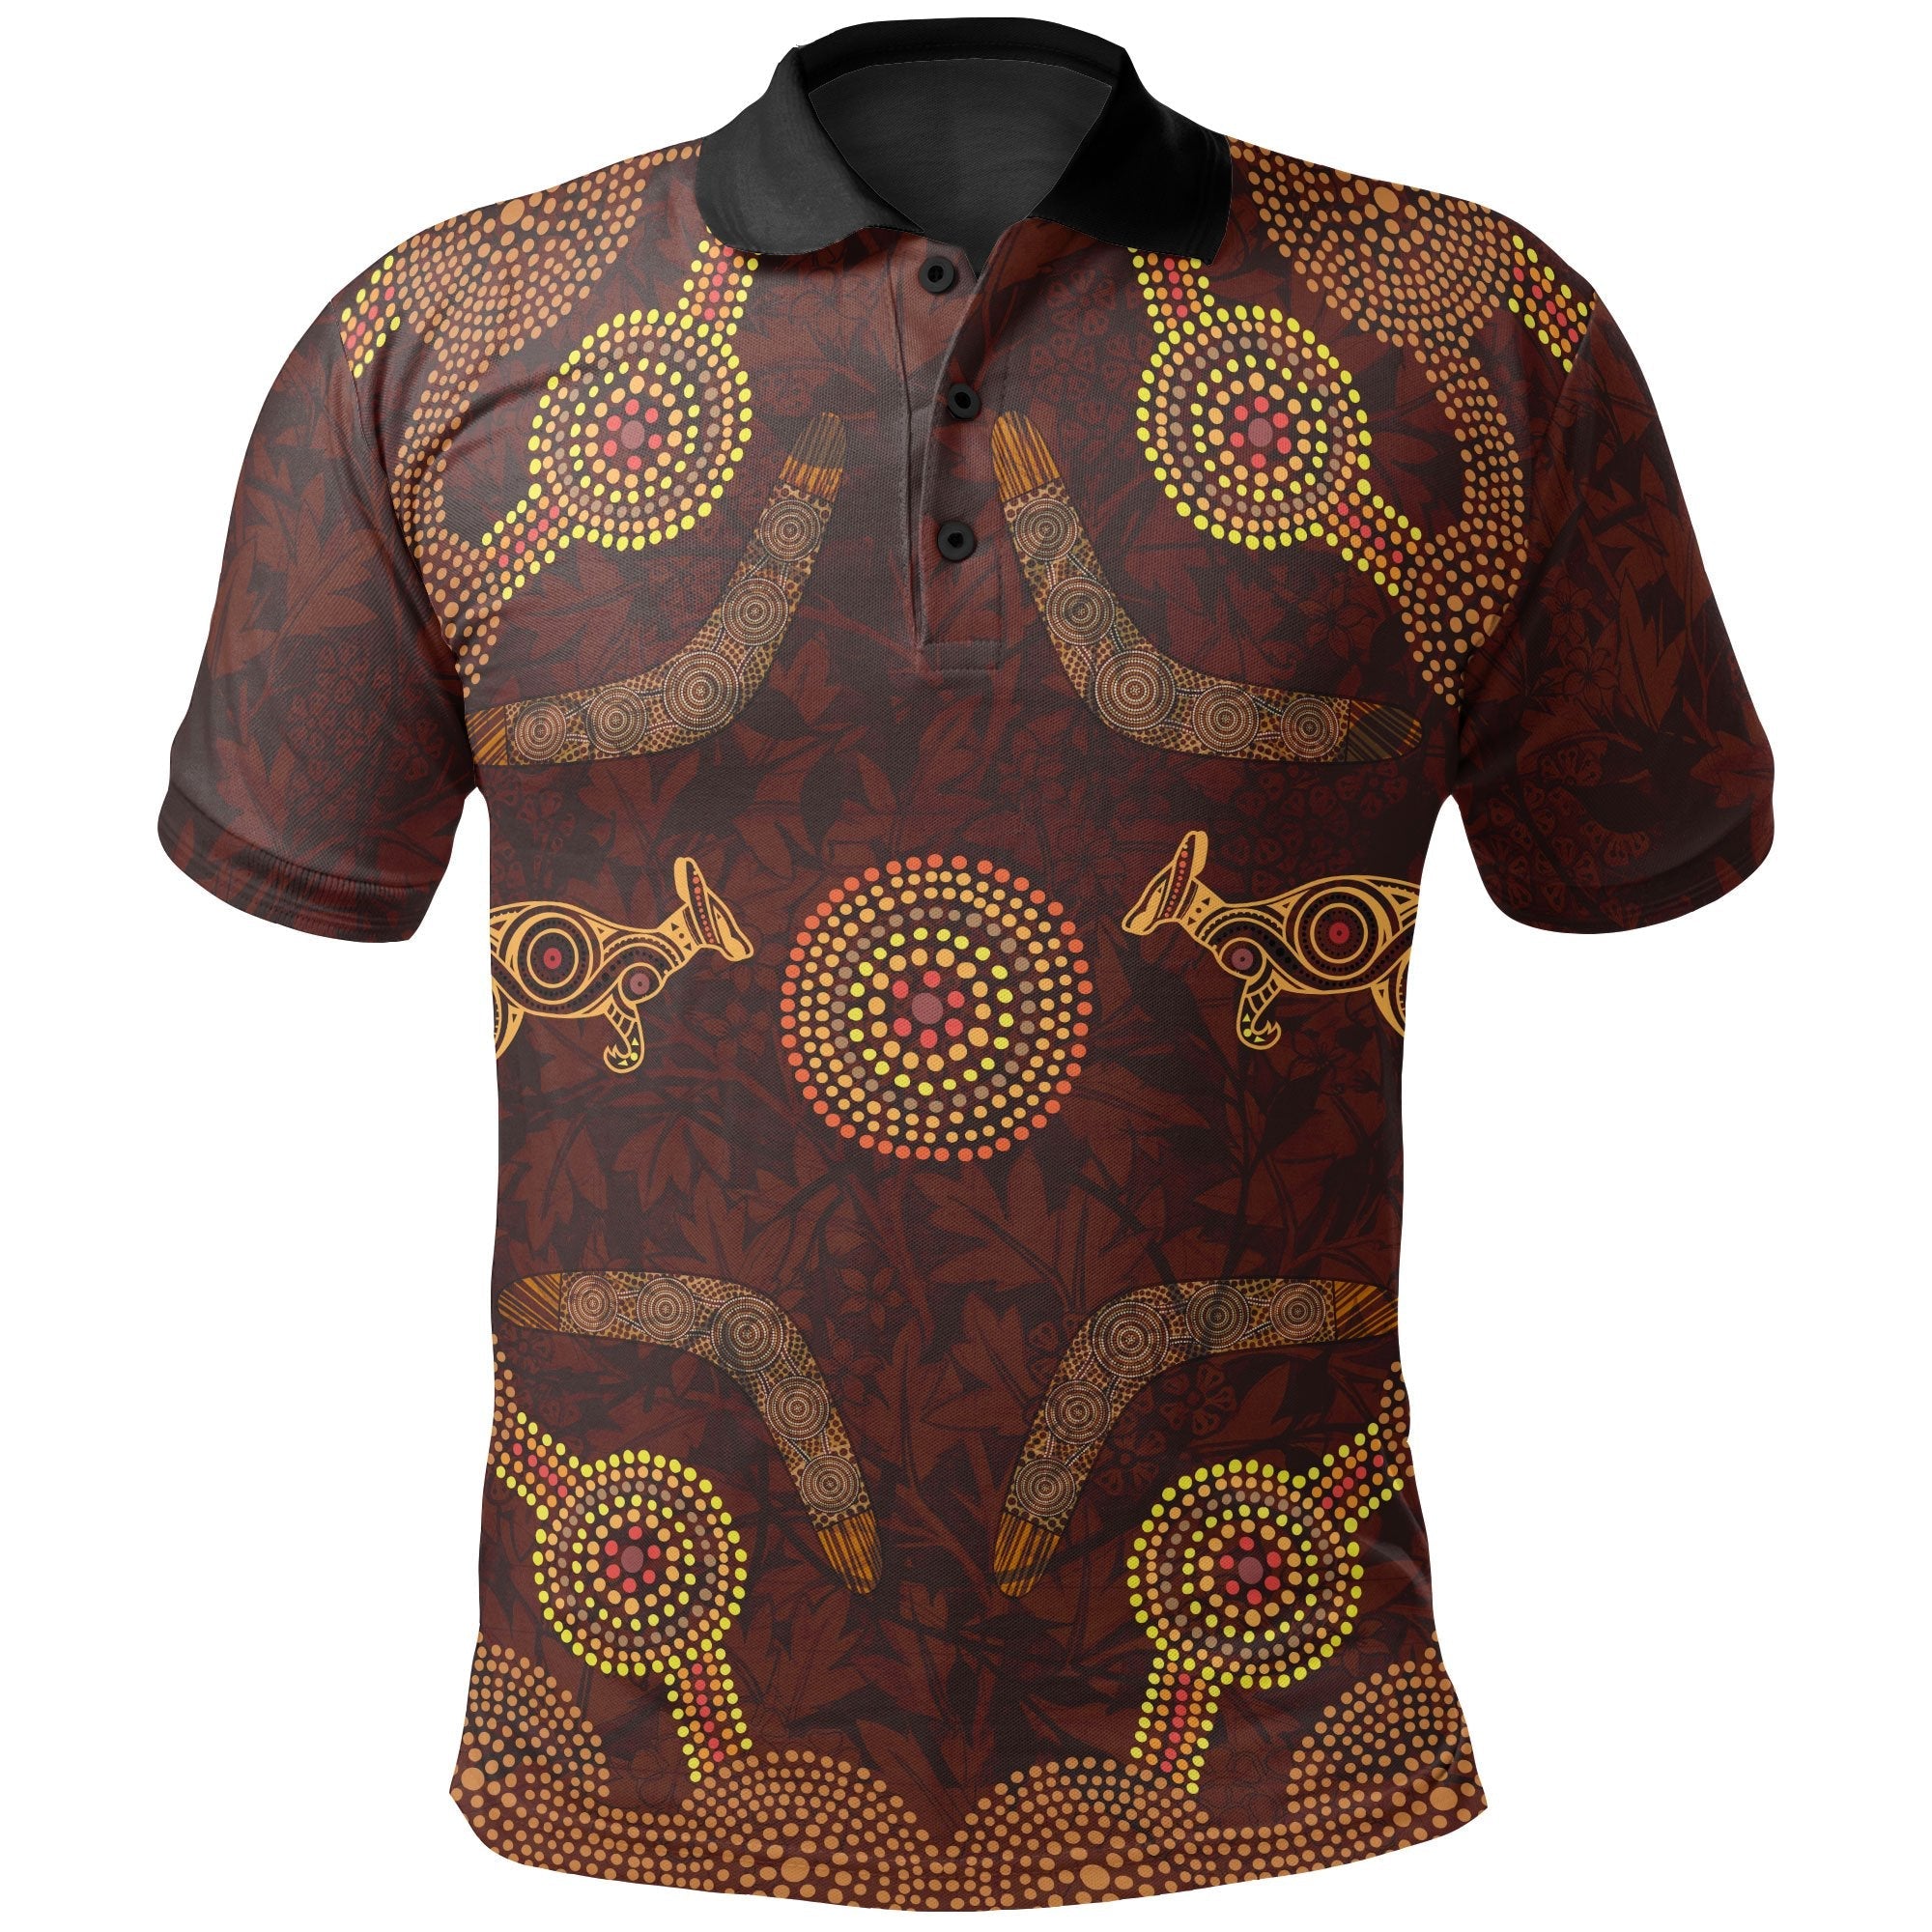 polo-shirt-aboriginal-dot-pattern-boomerang-kangaroo